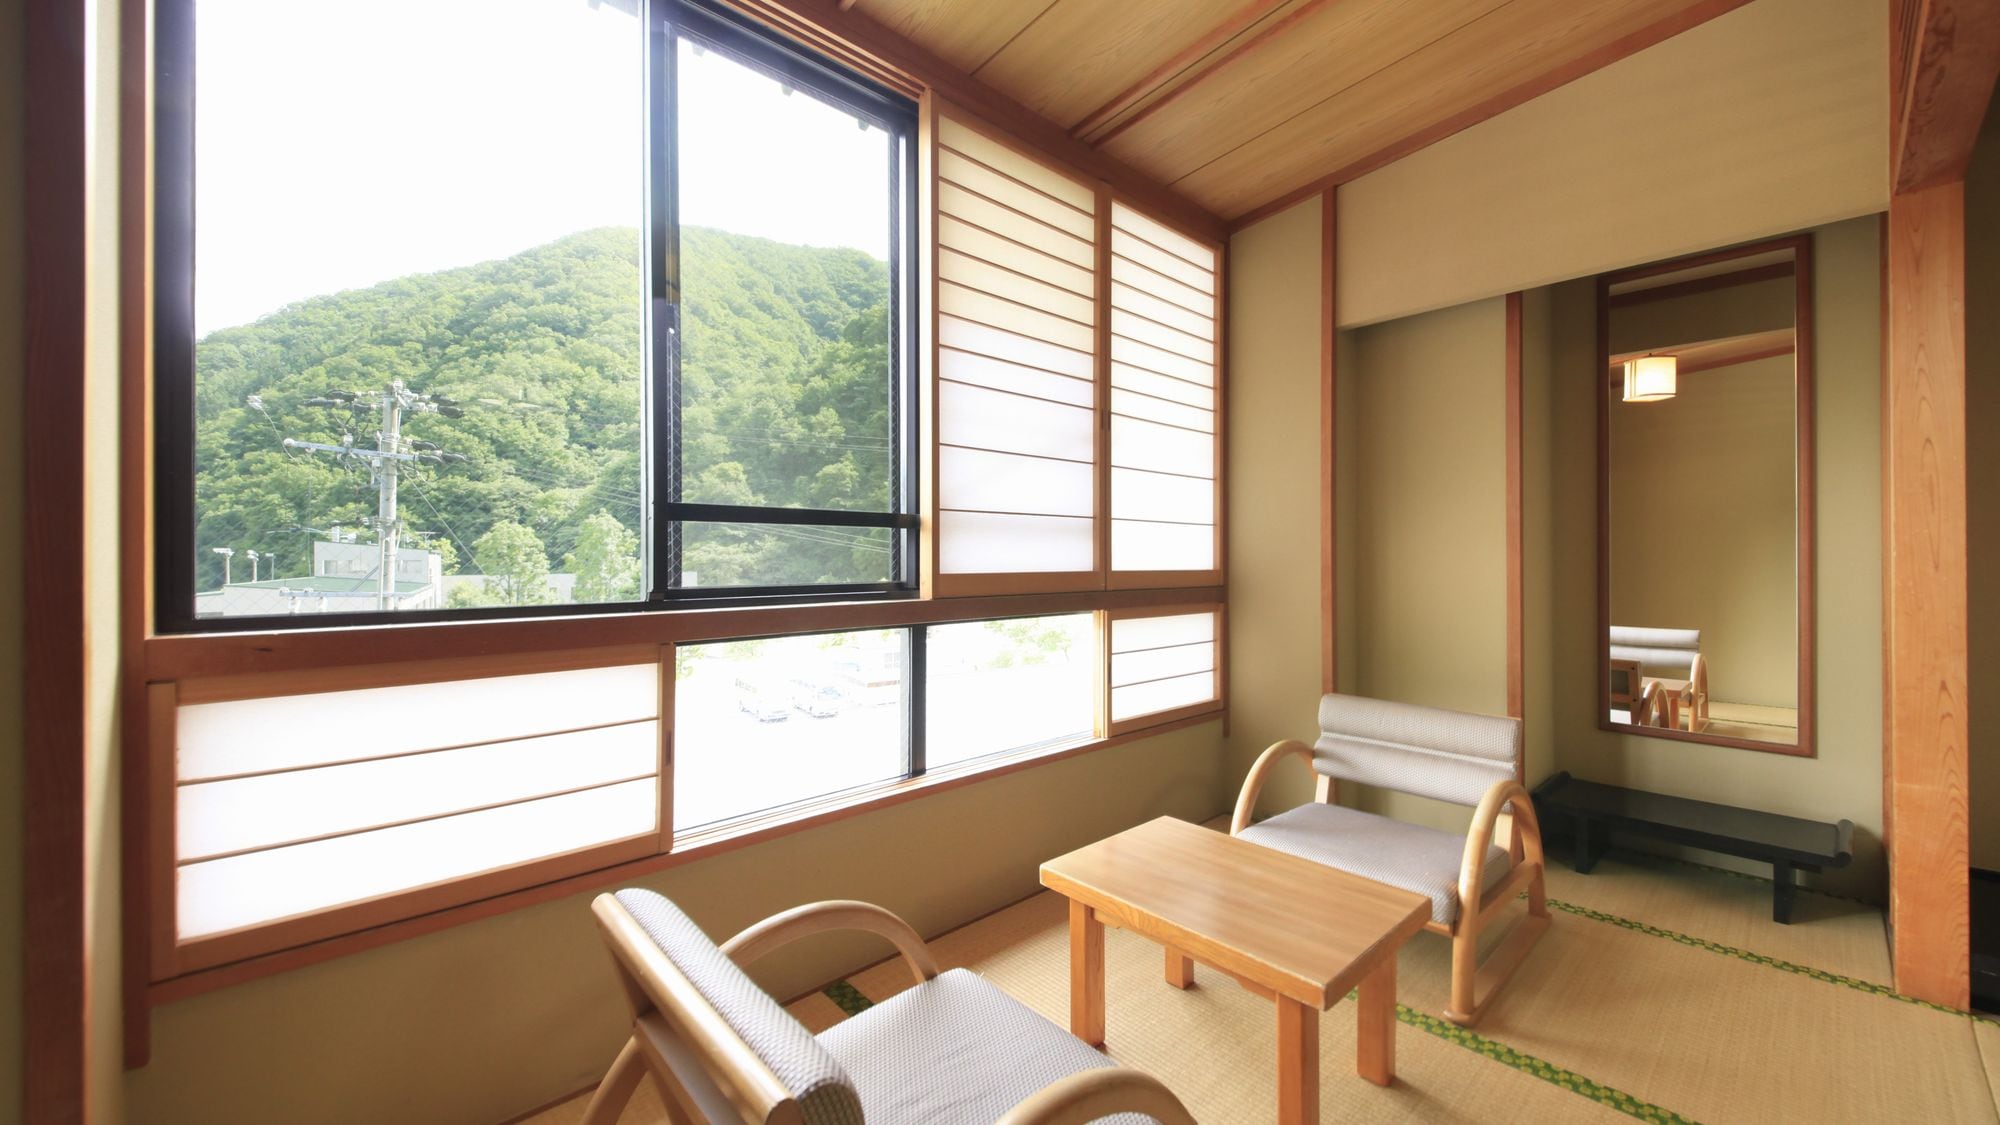 Hishokan Japanese-style room